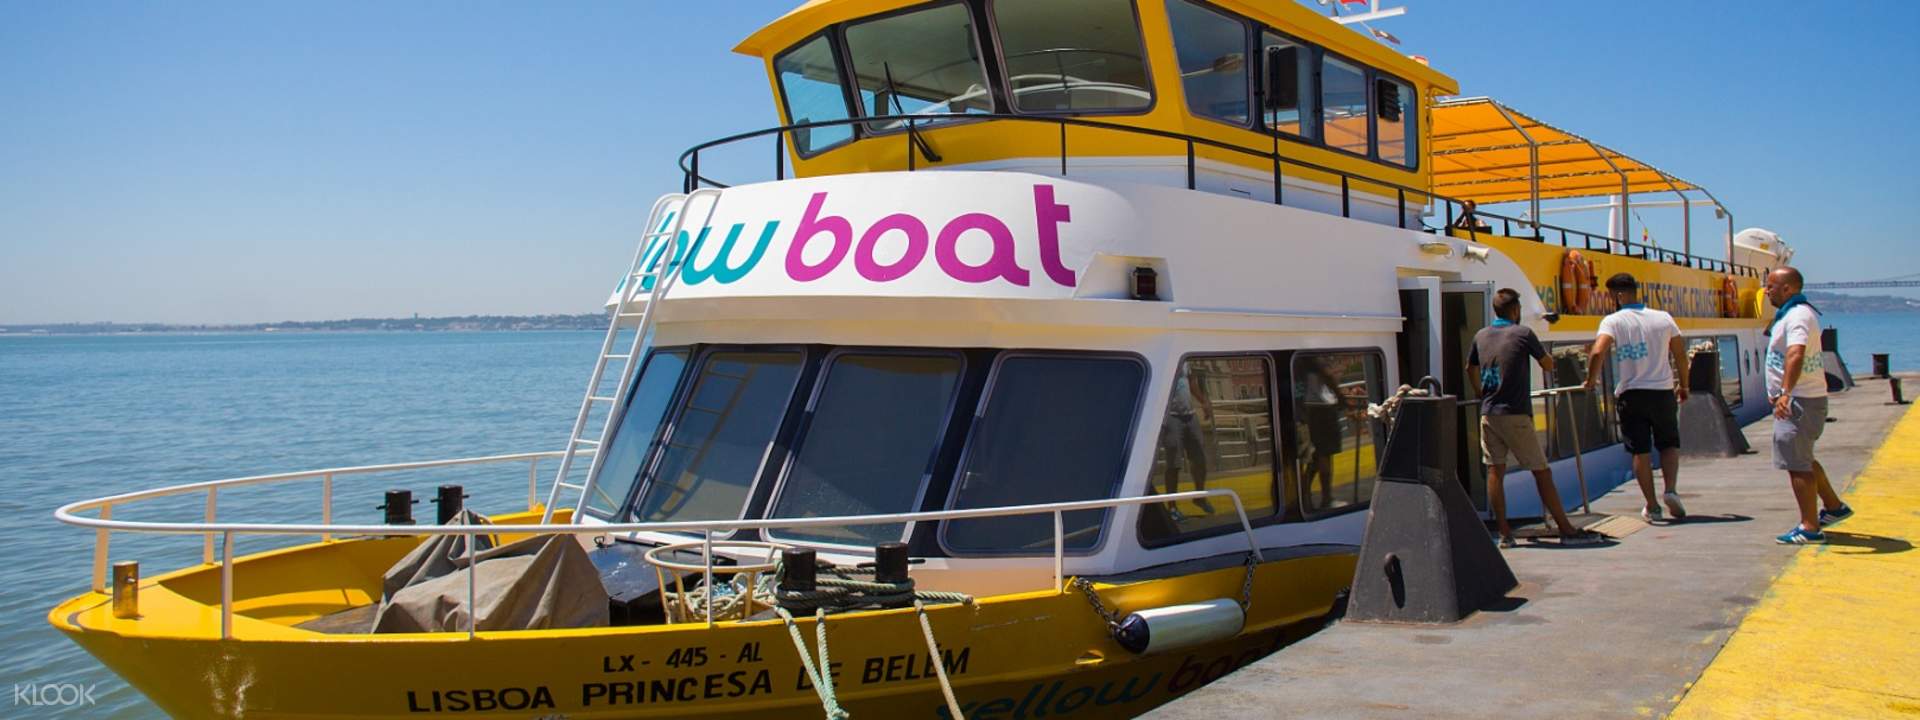 lisbon boat cruise hop on hop off